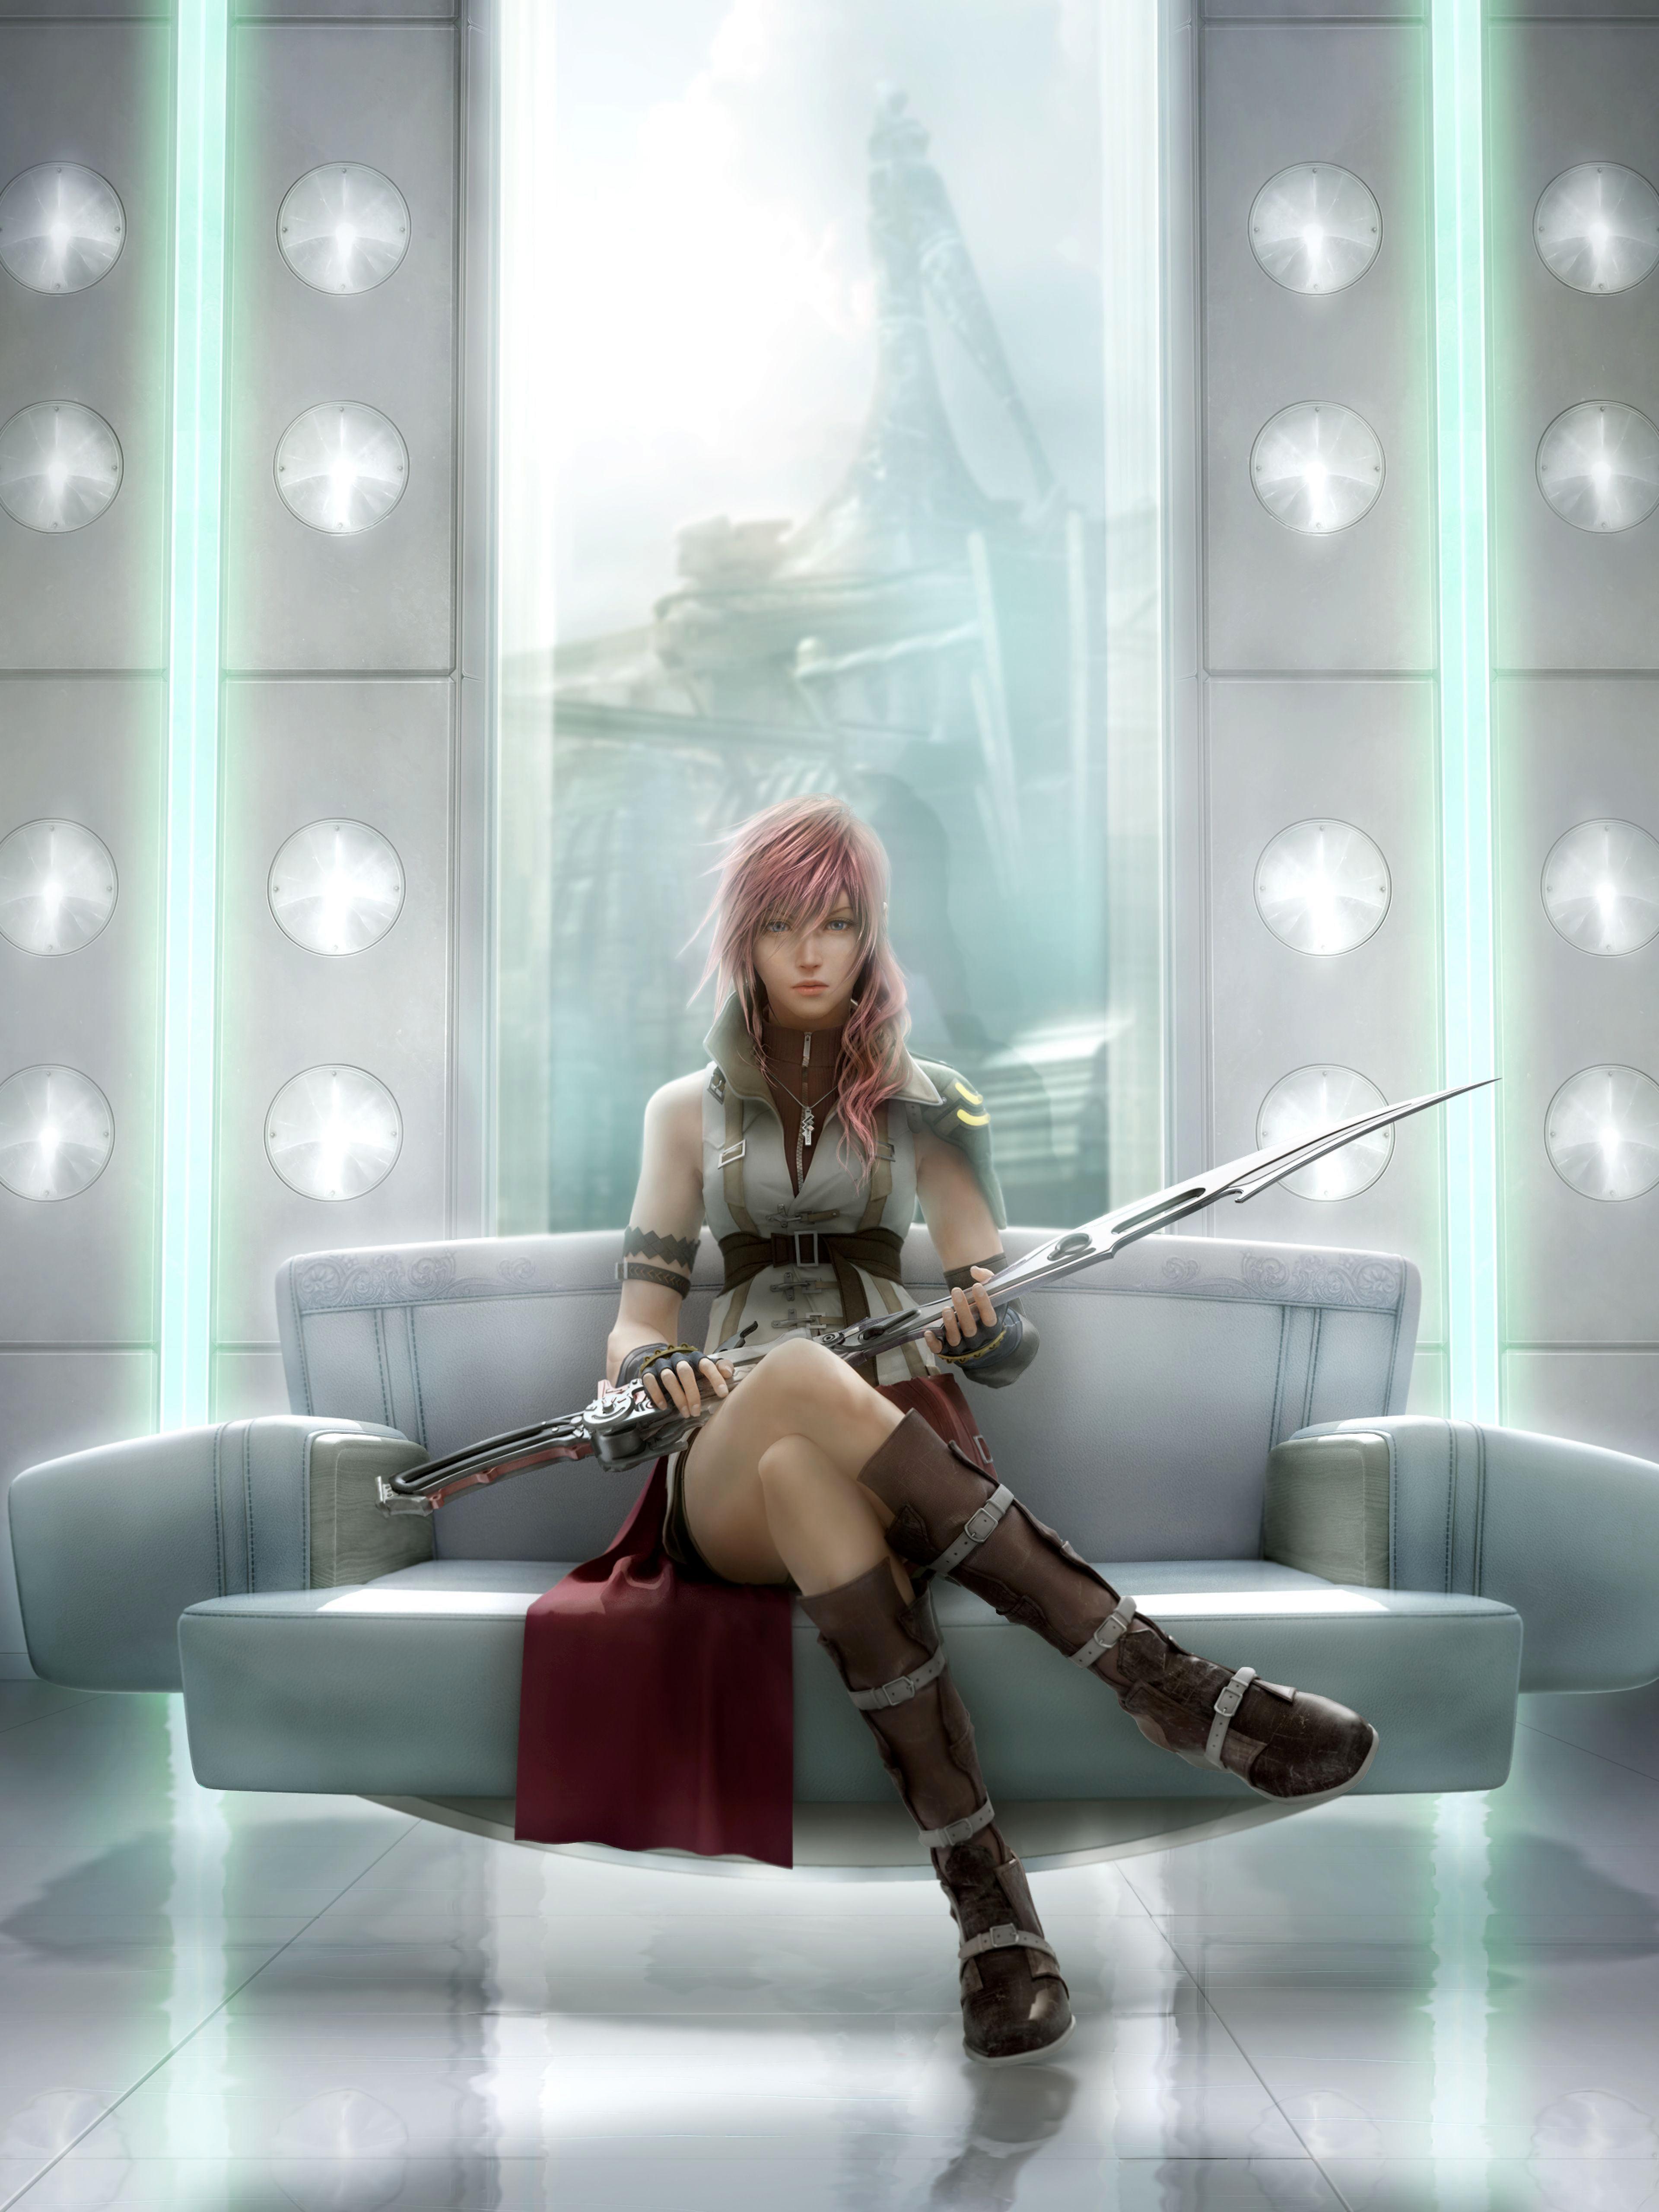 lightning final fantasy wallpaper,cg artwork,sitting,long hair,action figure,illustration